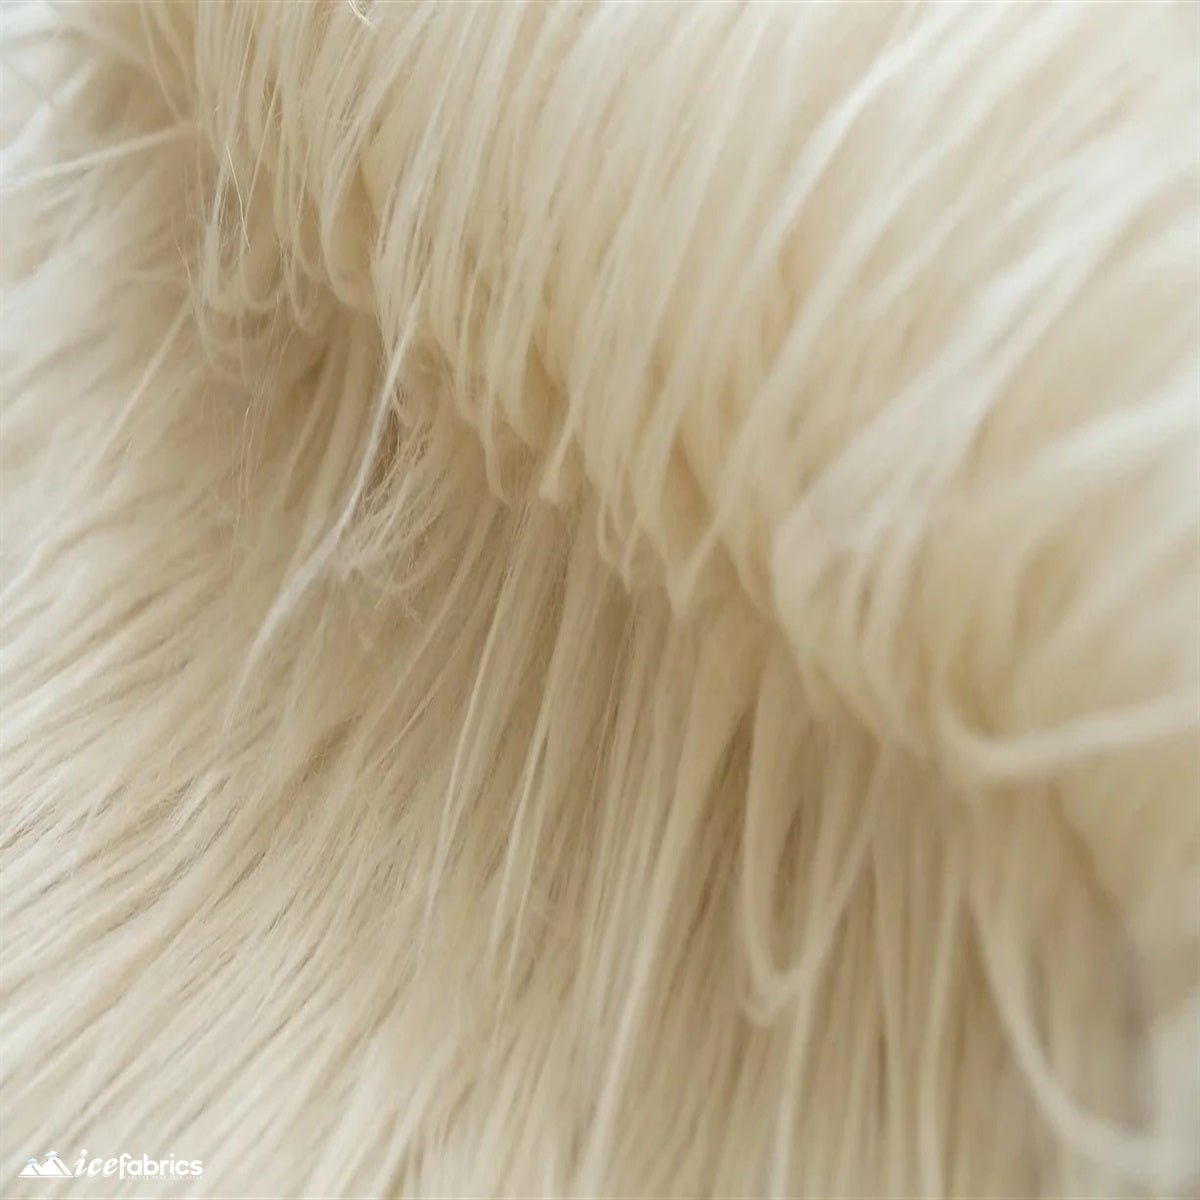 Shaggy Mohair Faux Fur Fabric/ 4 Inches Long PileICE FABRICSICE FABRICSCream1/2 Yard (60 inches Wide)Shaggy Mohair Faux Fur Fabric/ 4 Inches Long Pile ICE FABRICS